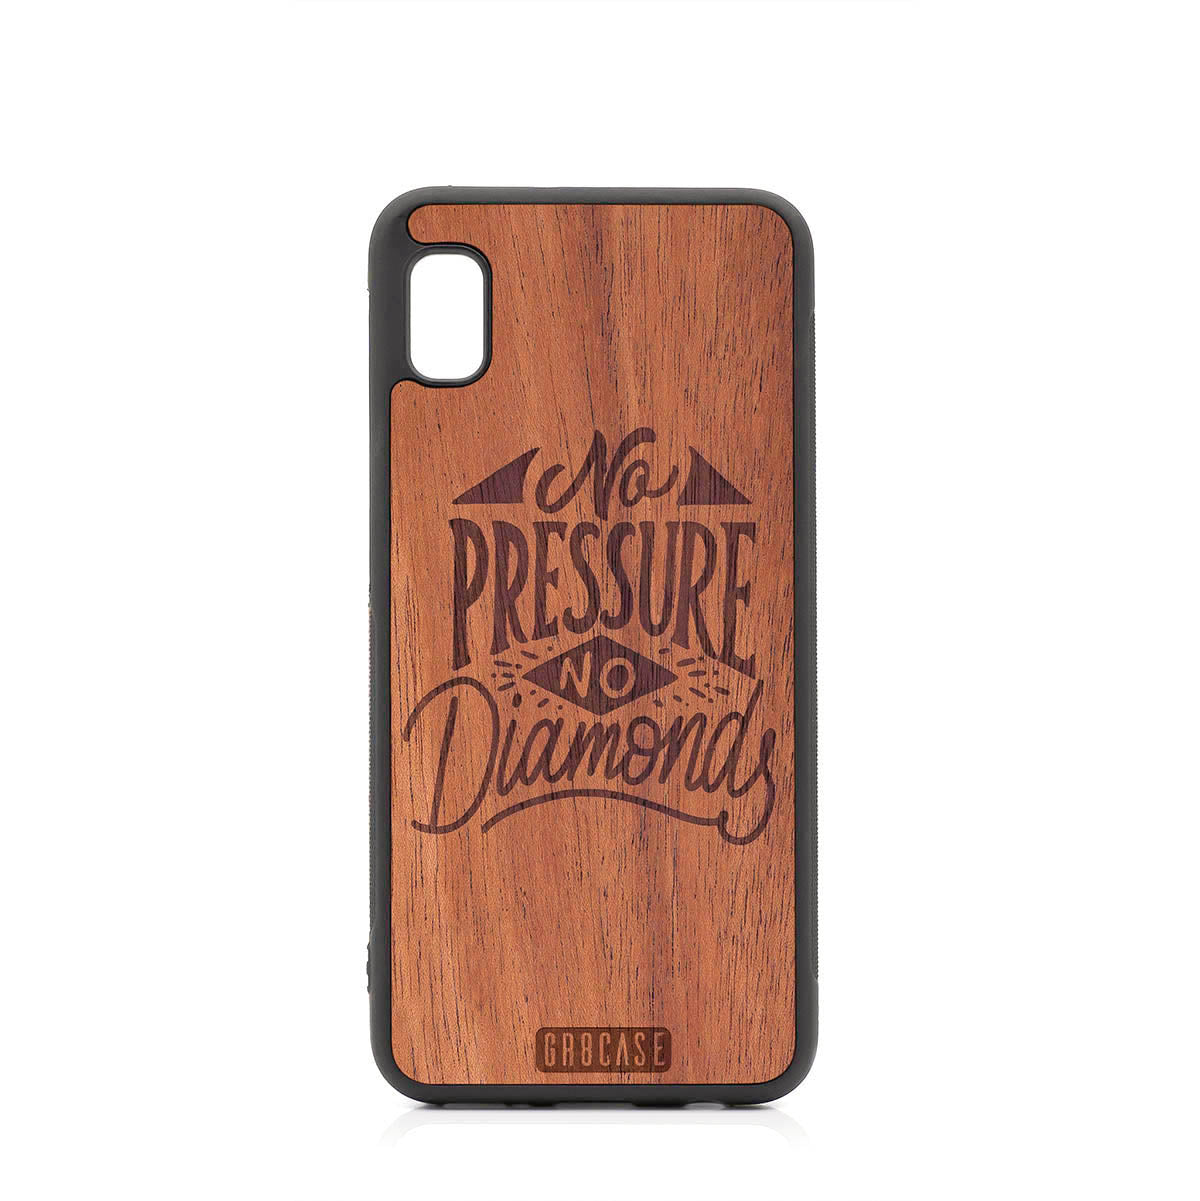 No Pressure No Diamonds Design Wood Case For Samsung Galaxy A10E